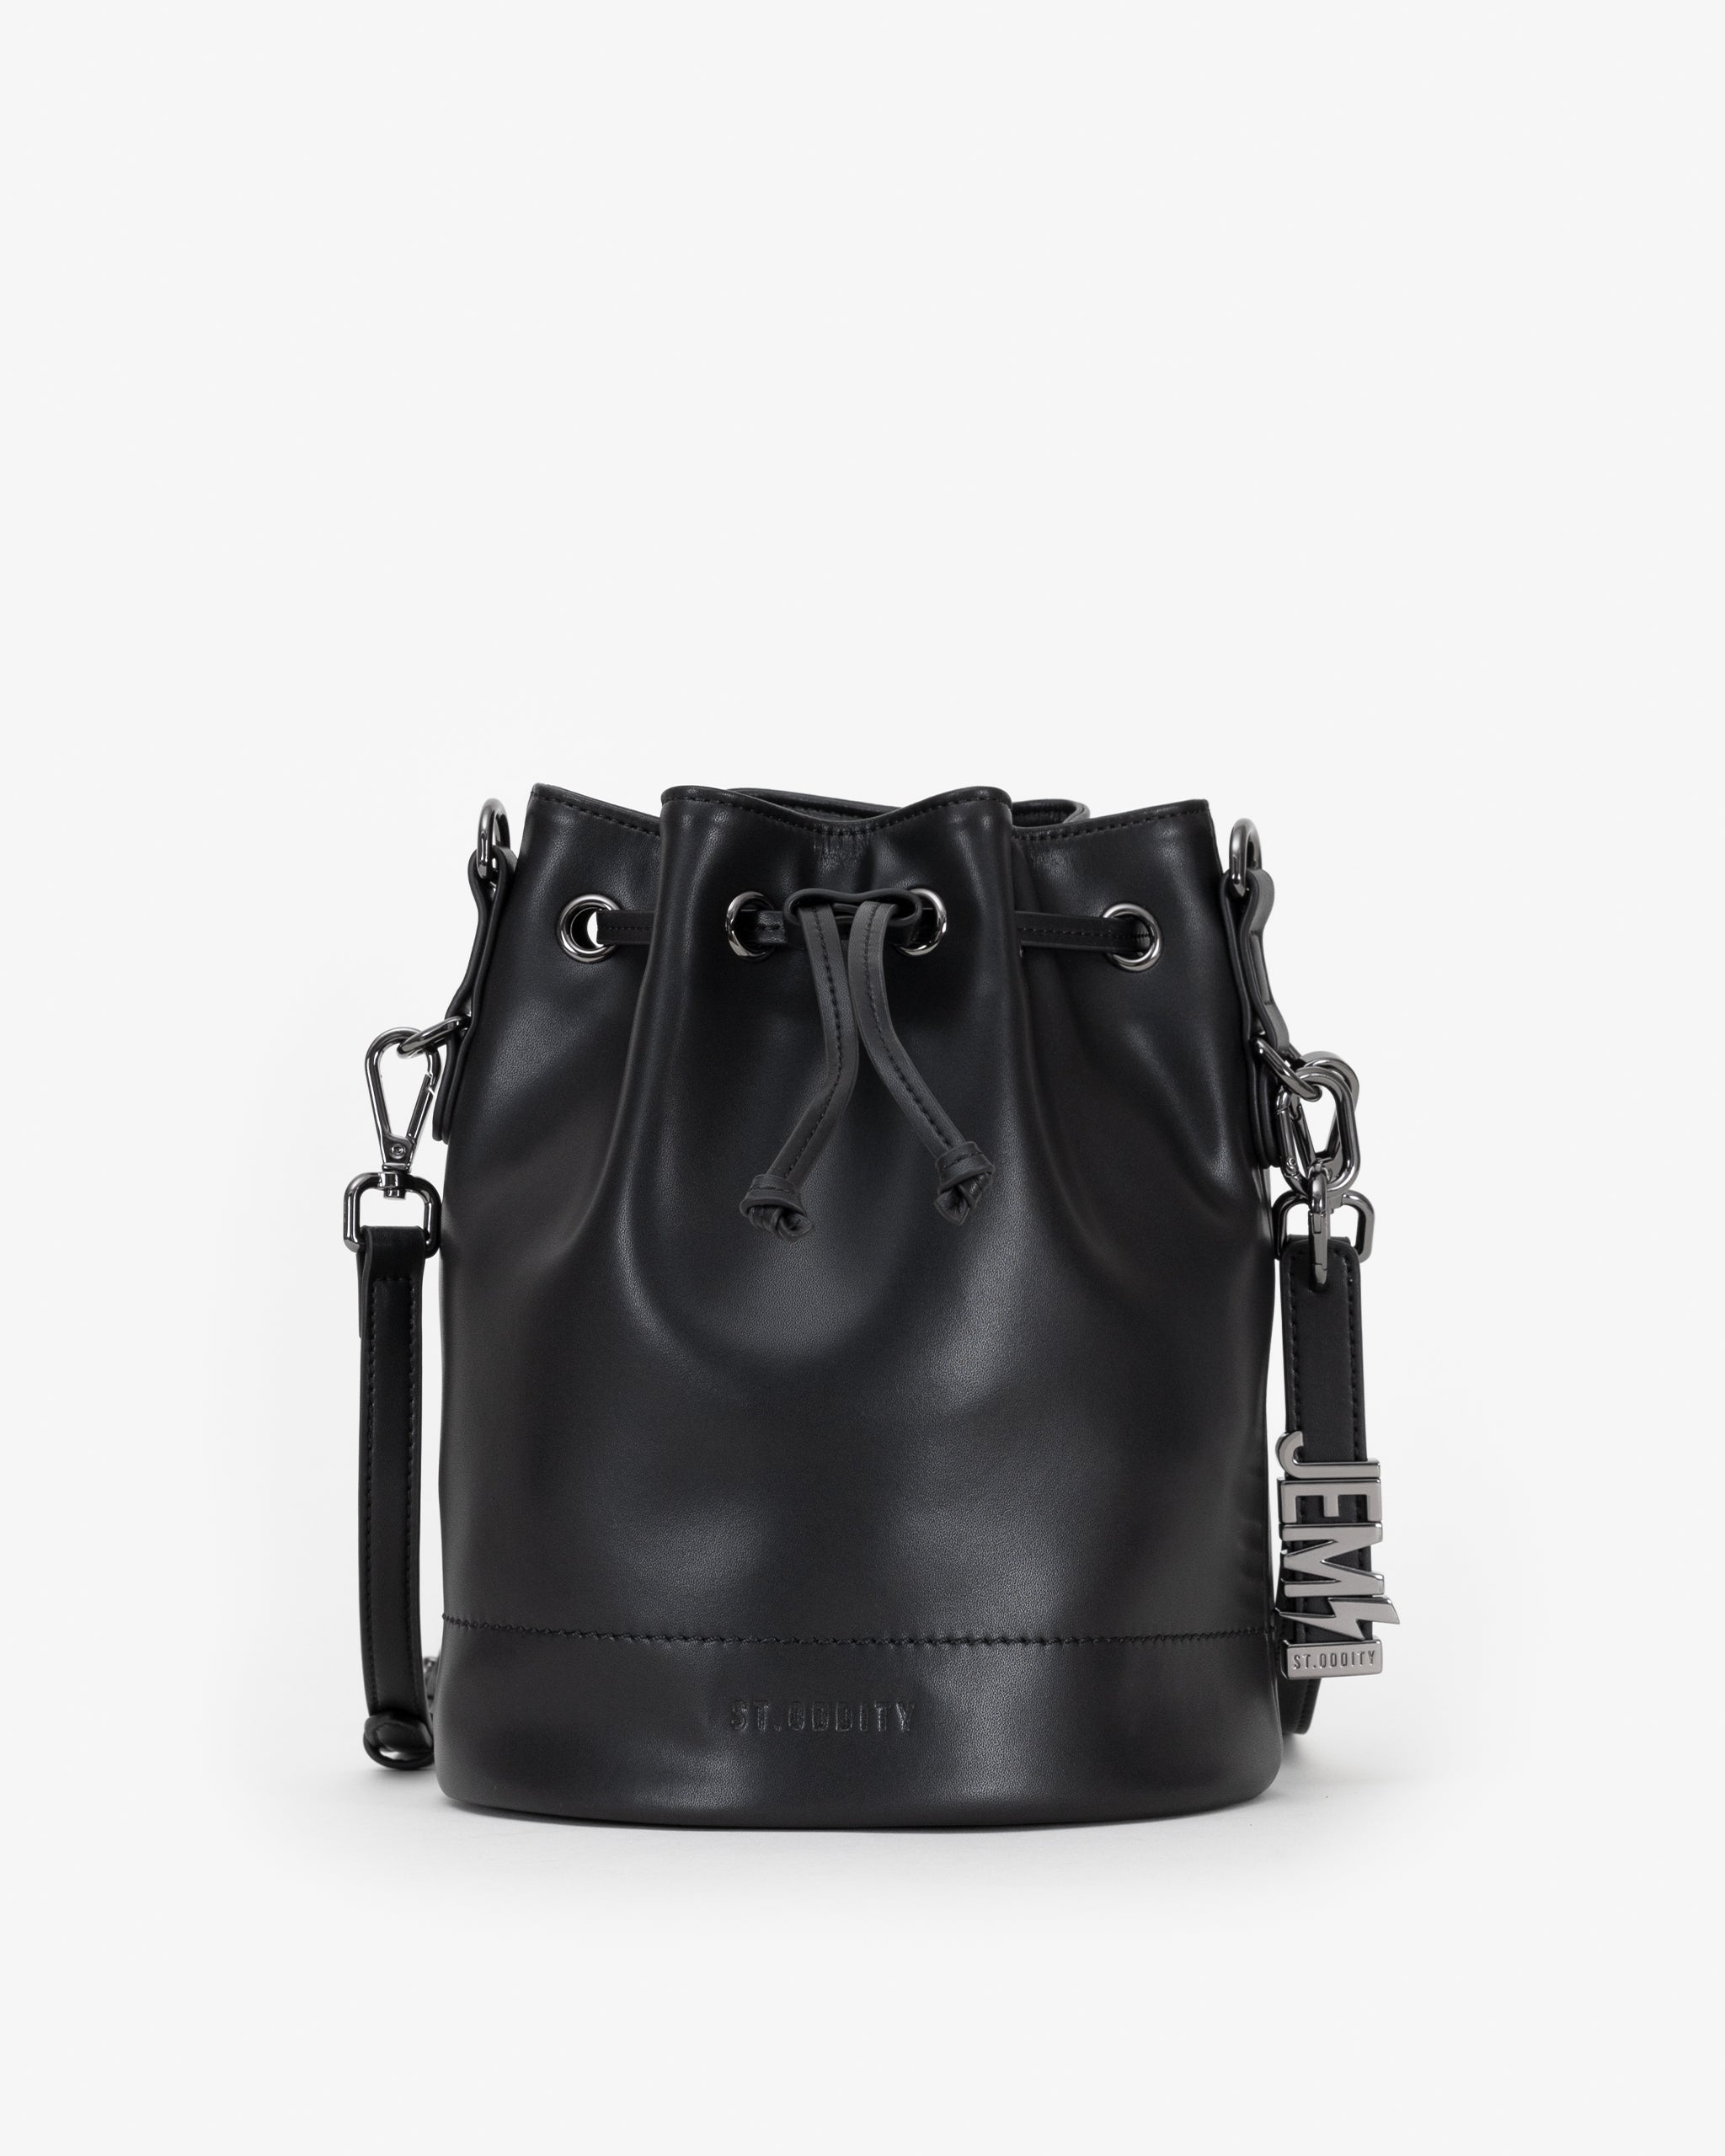 Bucket Bag in Black/Gummetal with Personalised Hardware